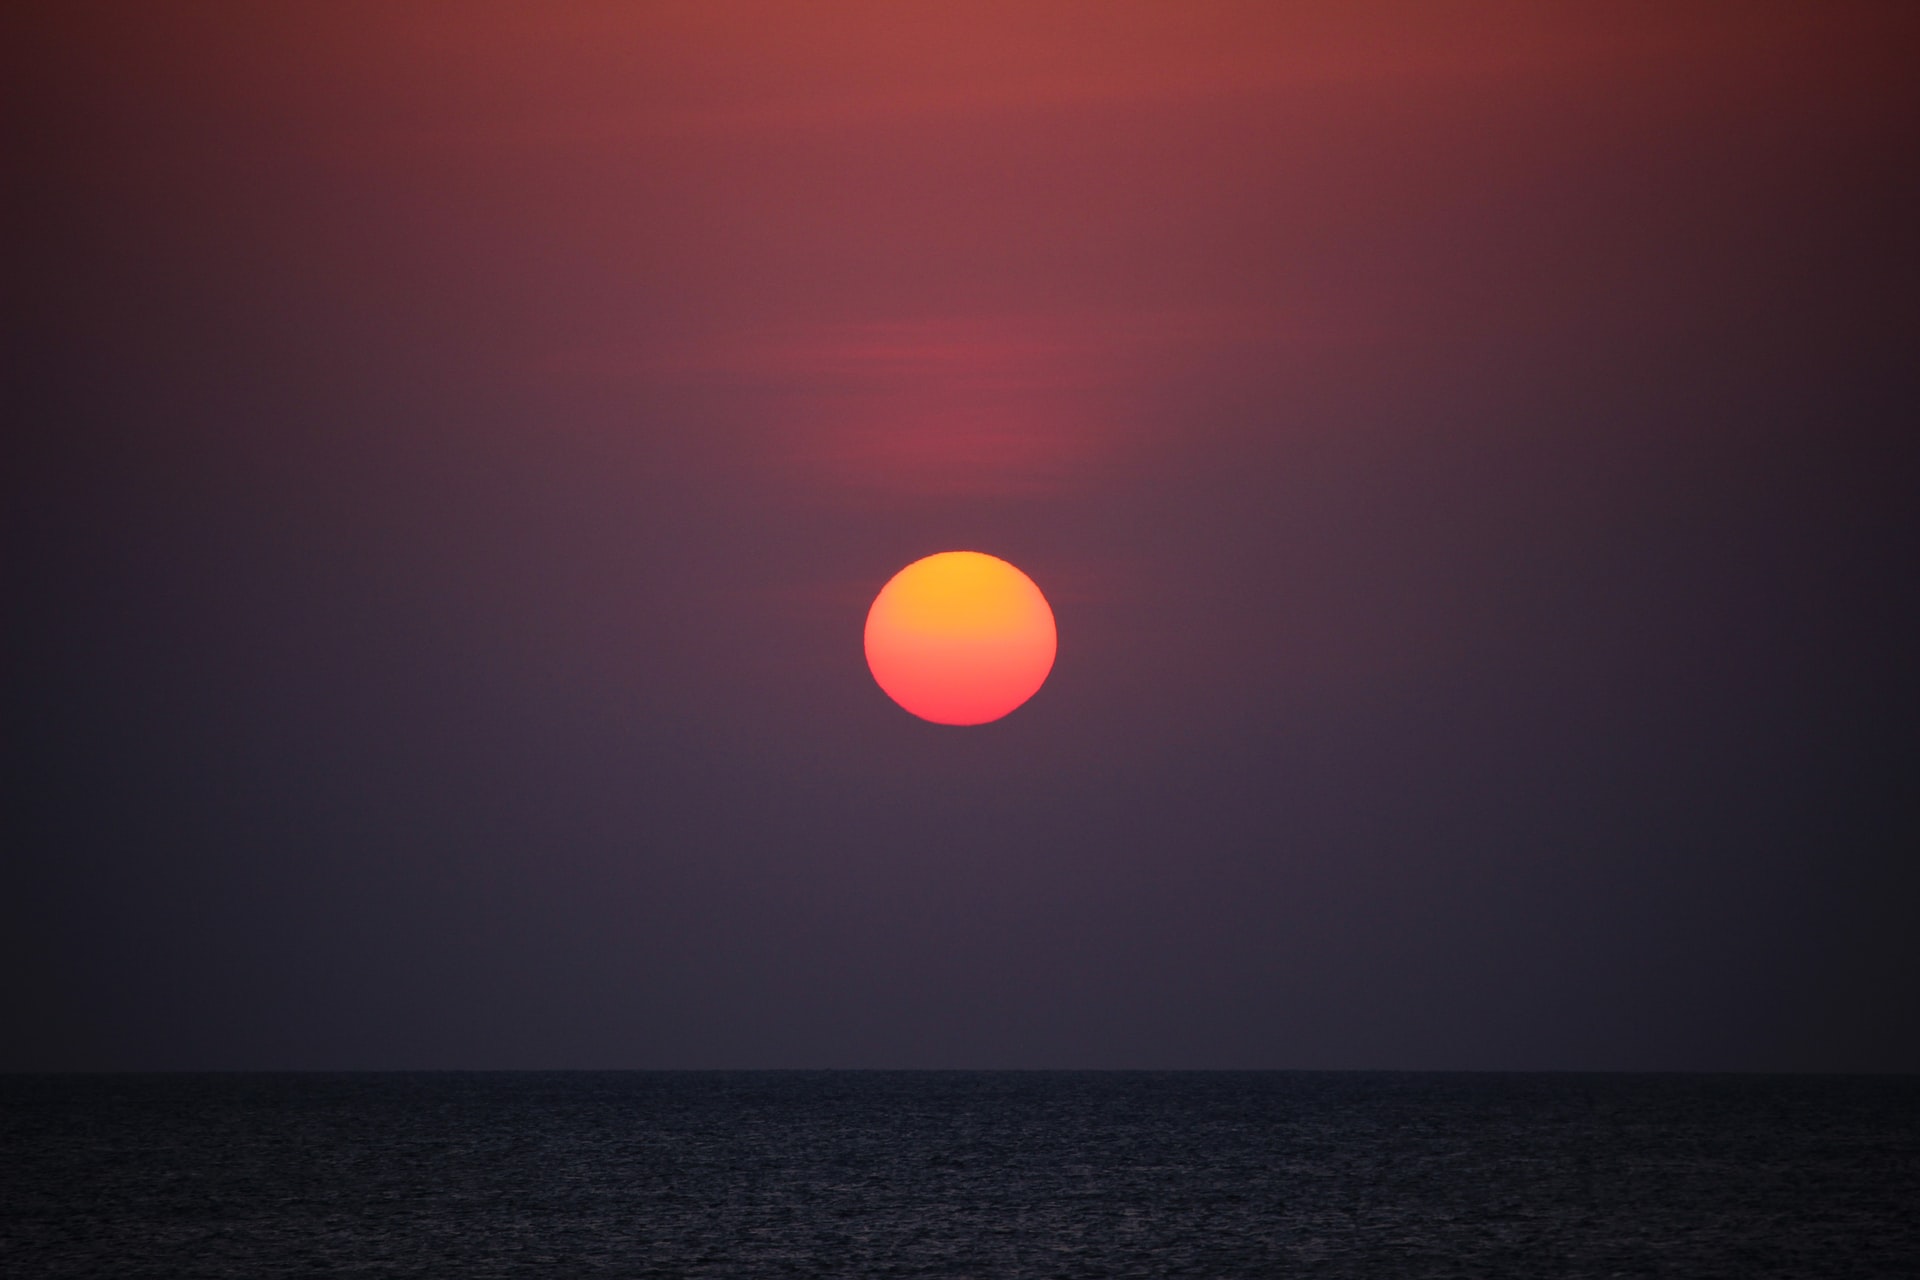 orange-sunset-over-ocean-at-night-in-dark-with-purple-skies